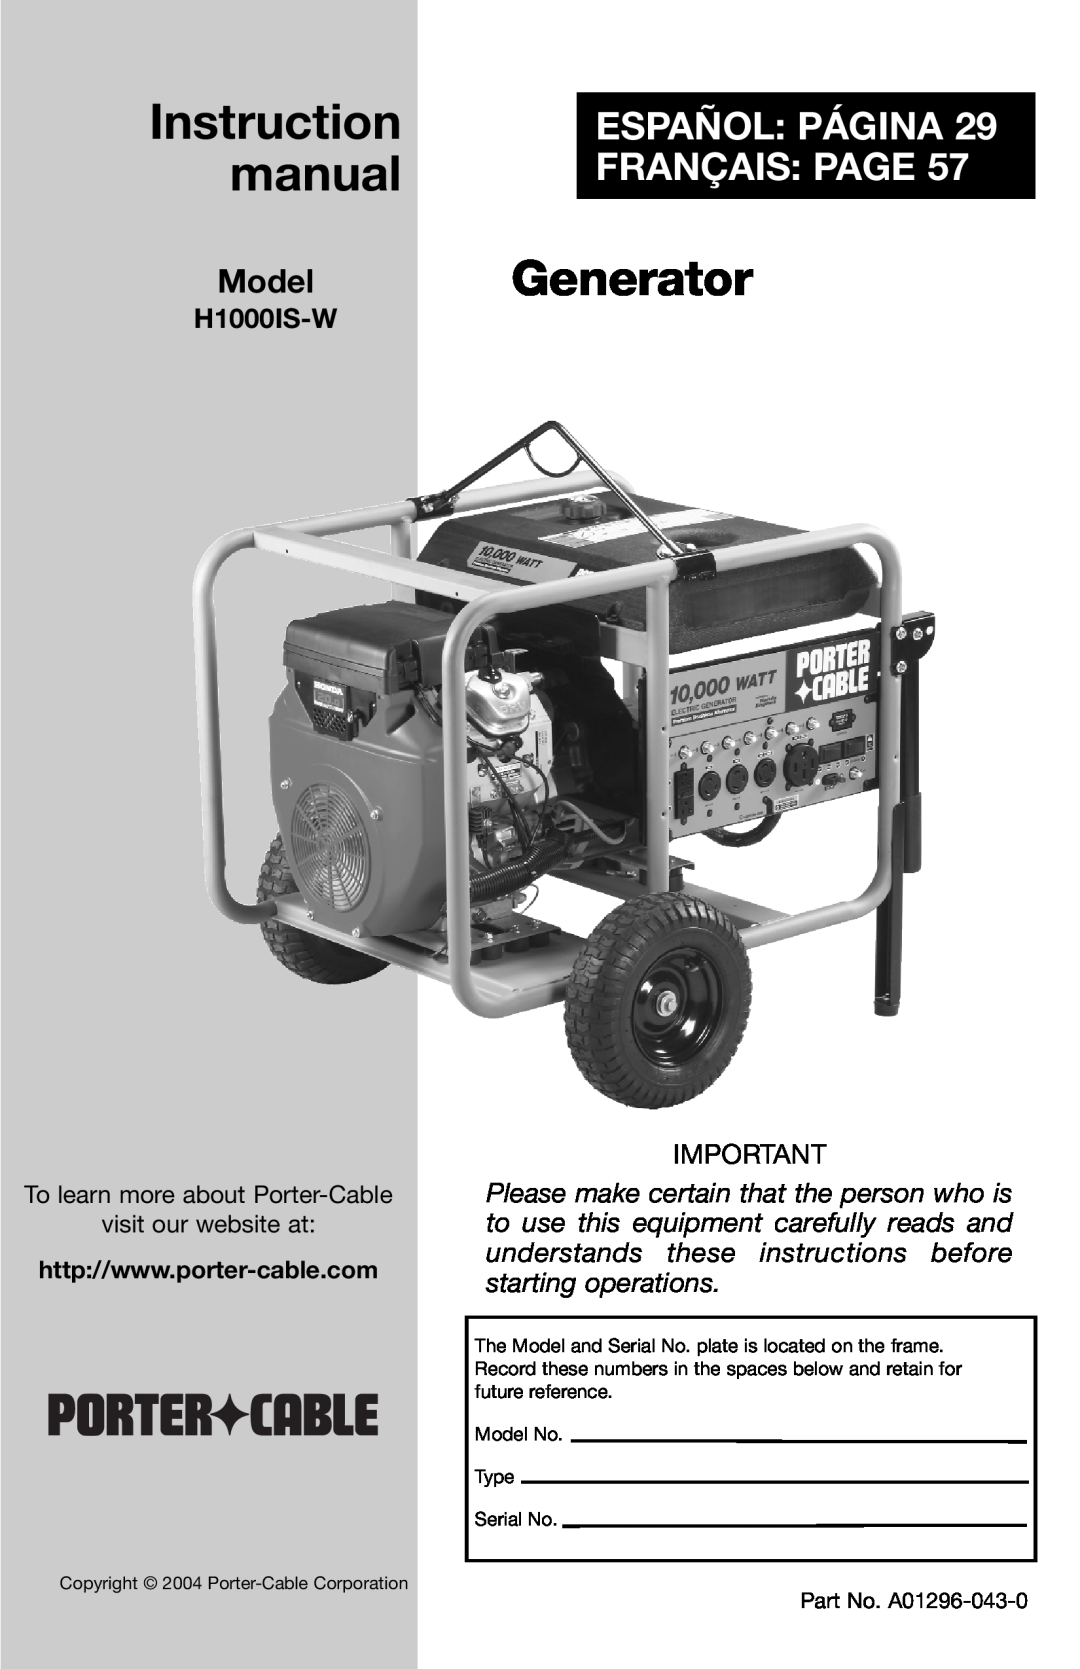 Porter-Cable H1000IS-W instruction manual Generator, Español Página Français Page, Model 